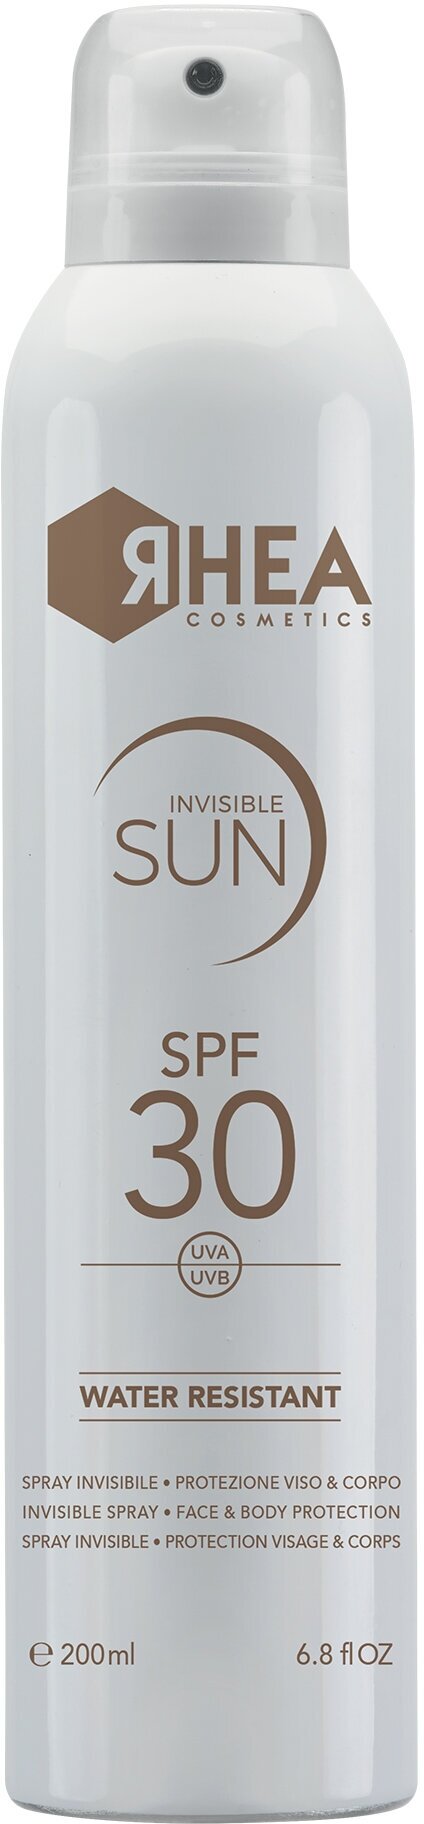 RHEA Солнцезащитный спрей для лица и тела SPF30 Invisible Sun 200 мл